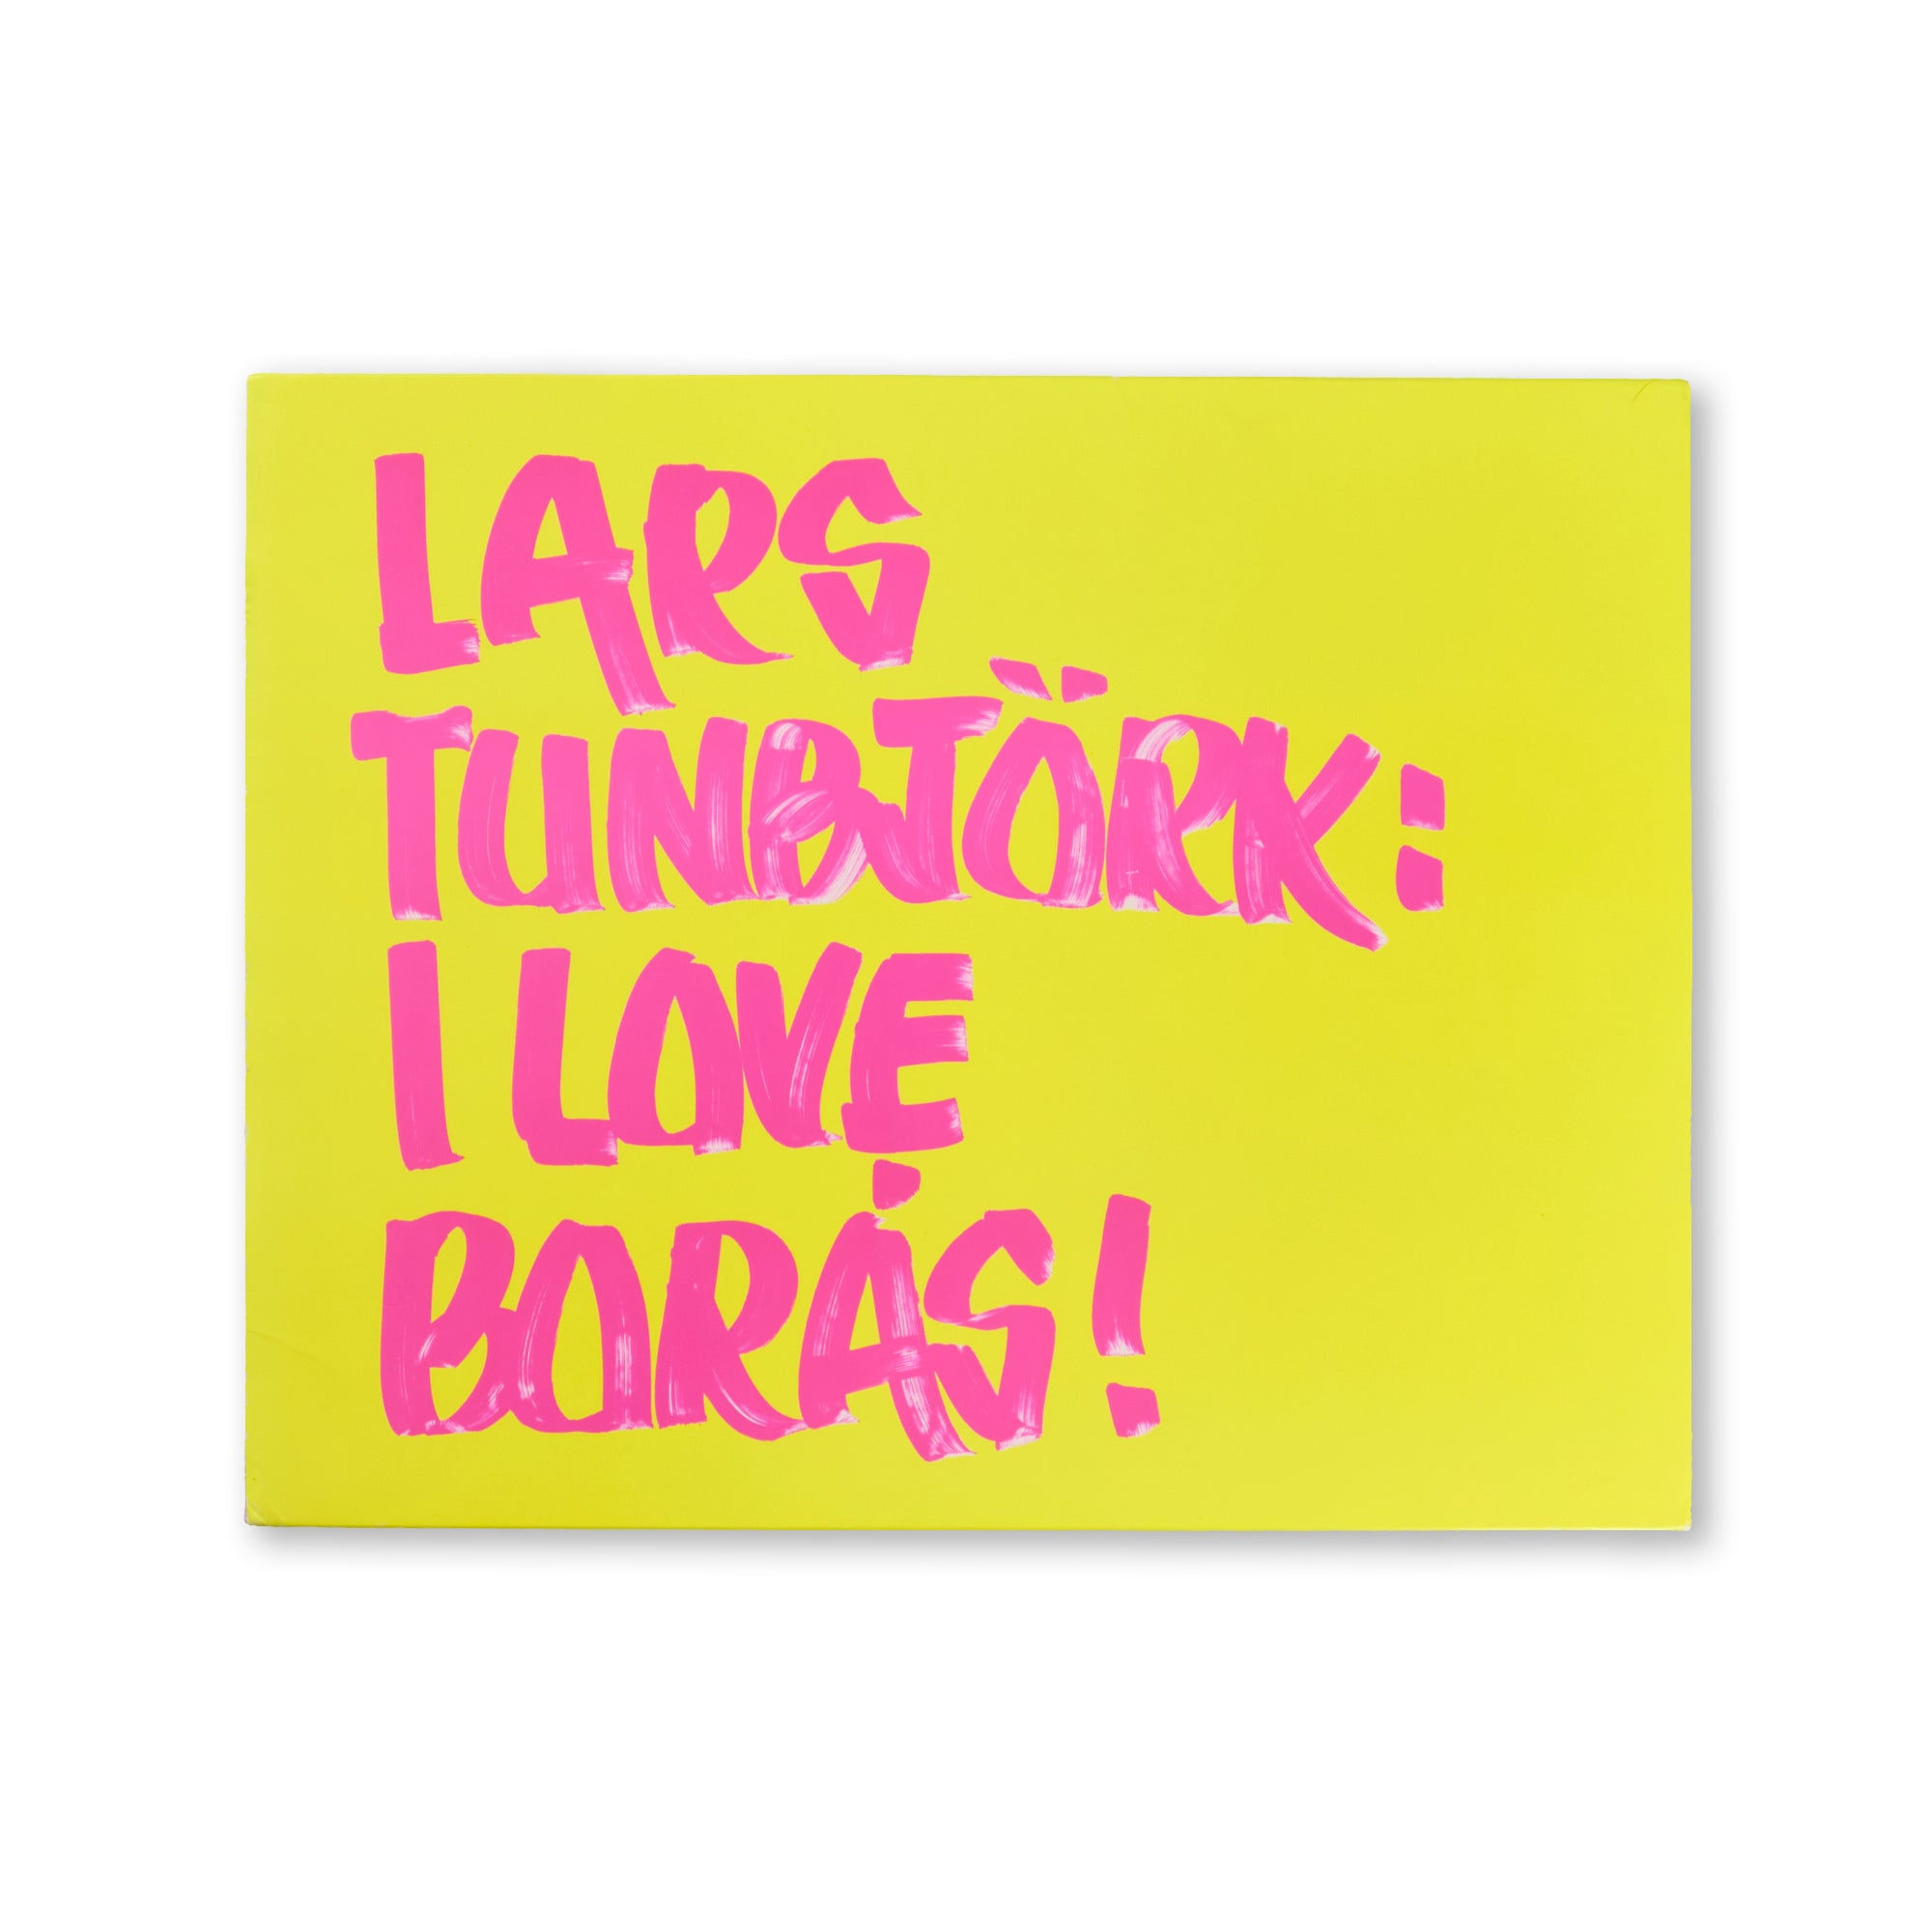 I Love Boras Lars Tunbjork